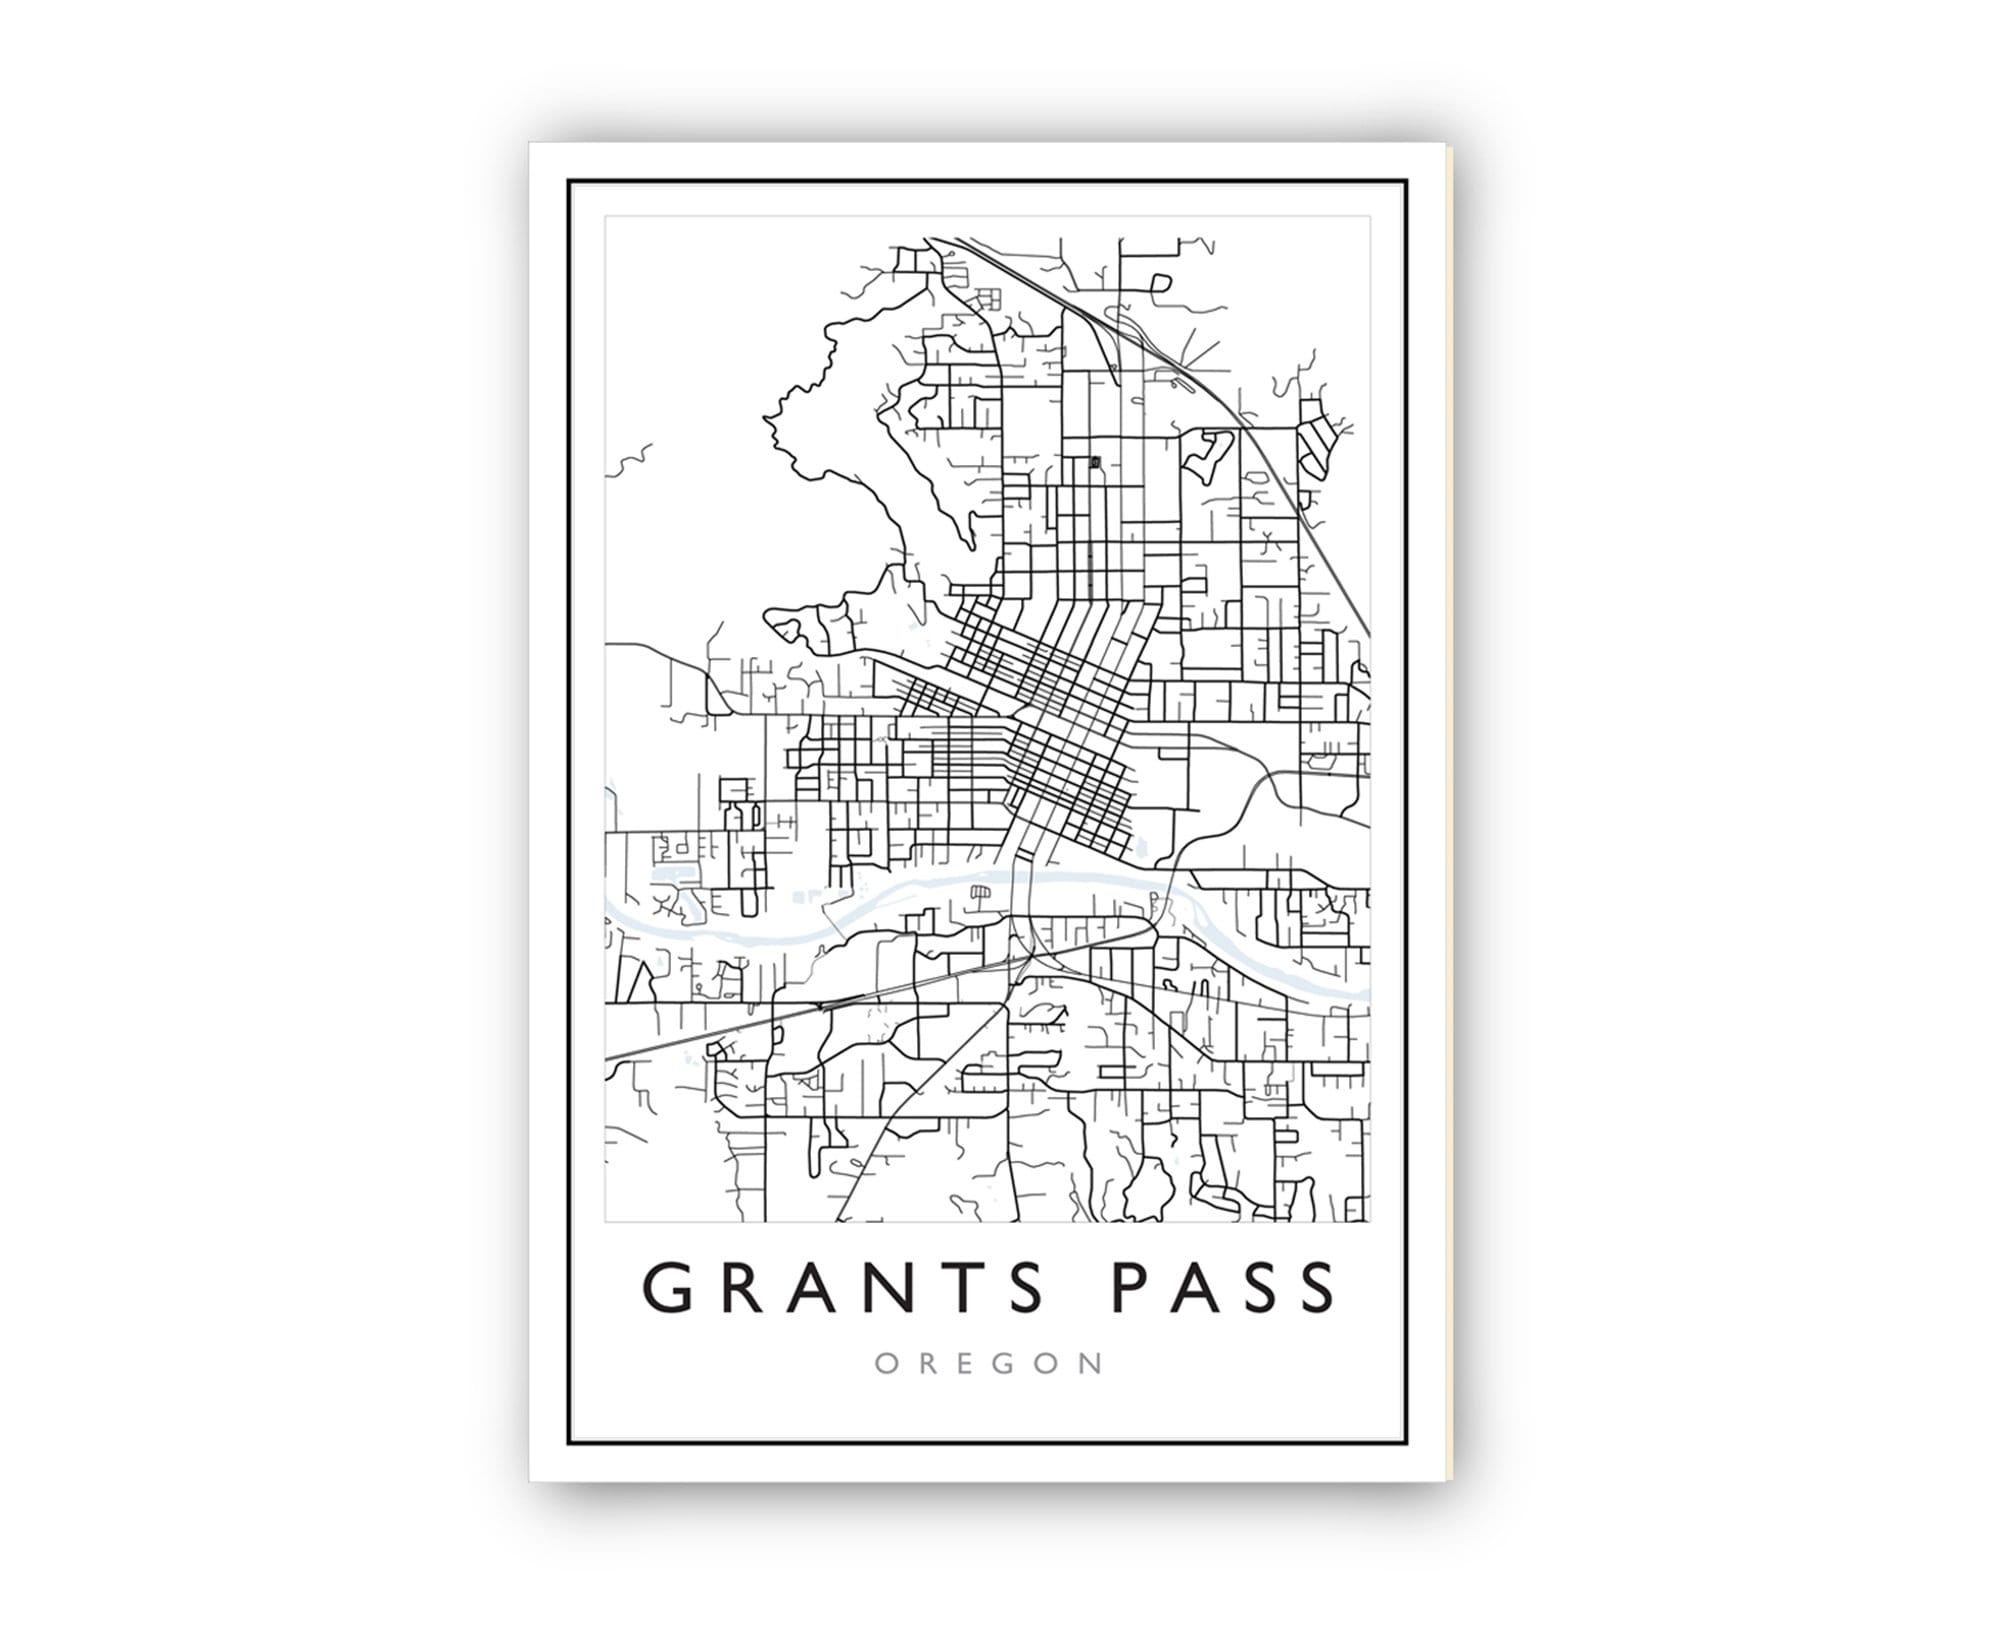 Grants Pass Oregon City Map, Oregon City Road Map Poster, City Street Map Print, Modern US City Map, Home Art Decoration, Office Wall Art